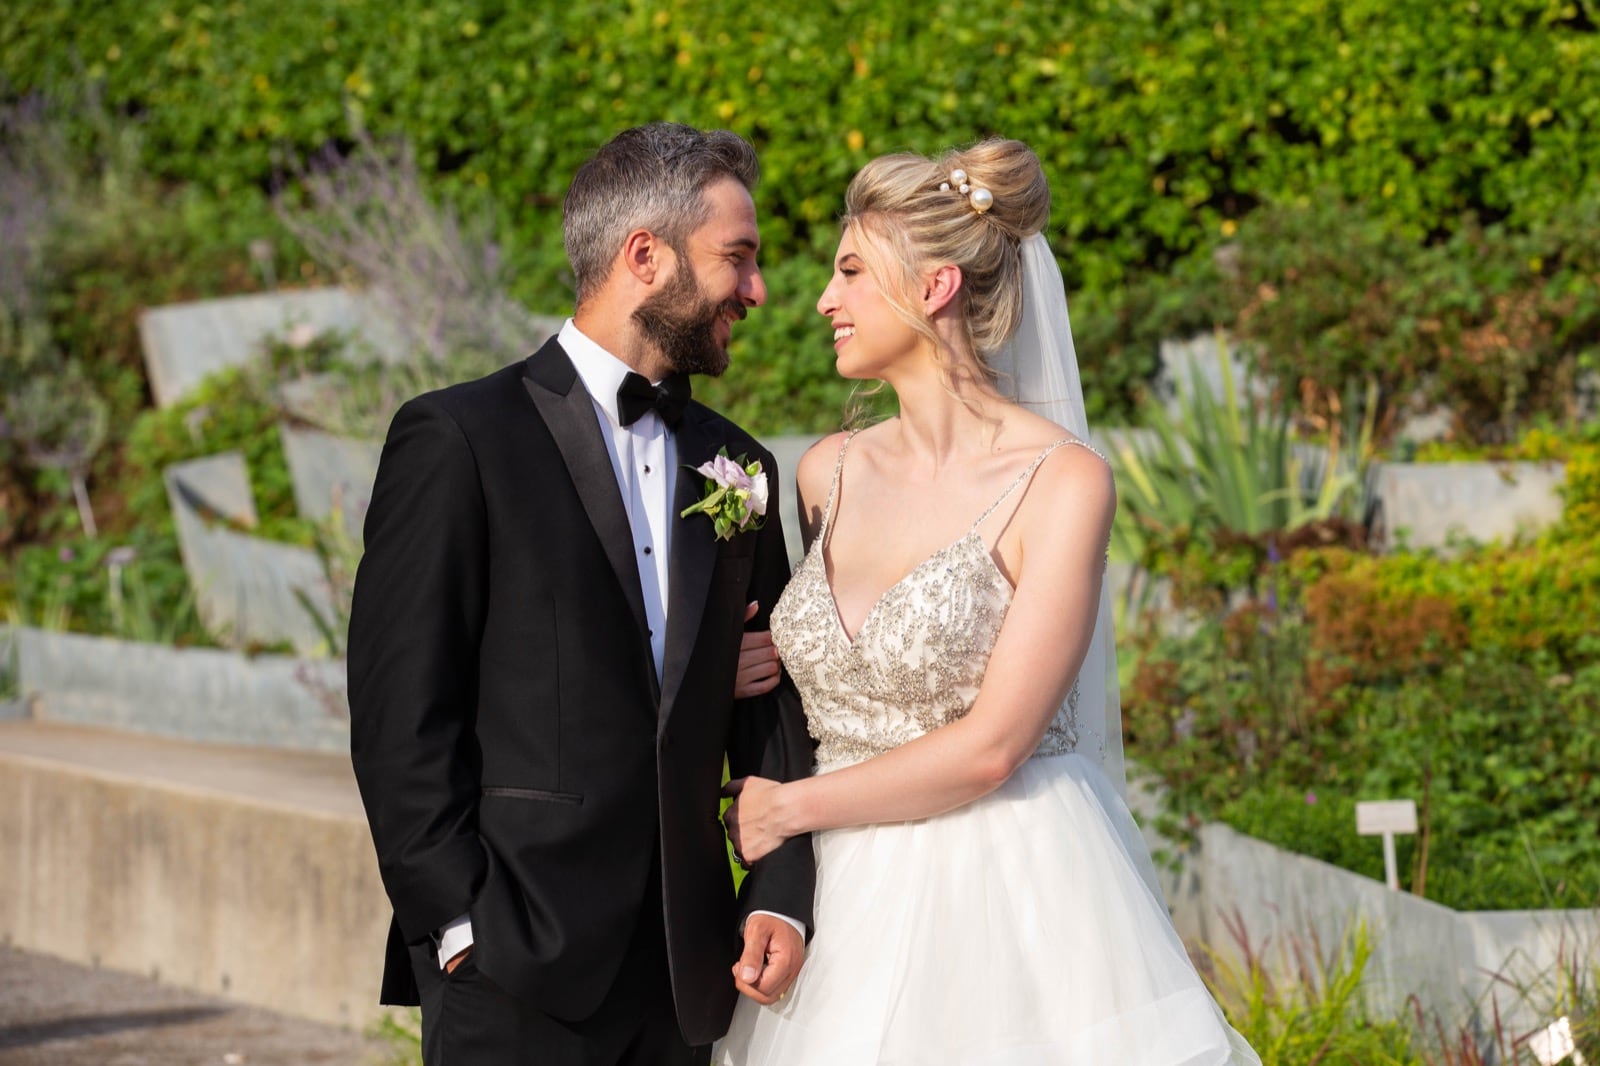 Amanda and David's Enchanting Wedding at Toronto Botanical Gardens - A Photographic Journey by Alexandra Jakubowska